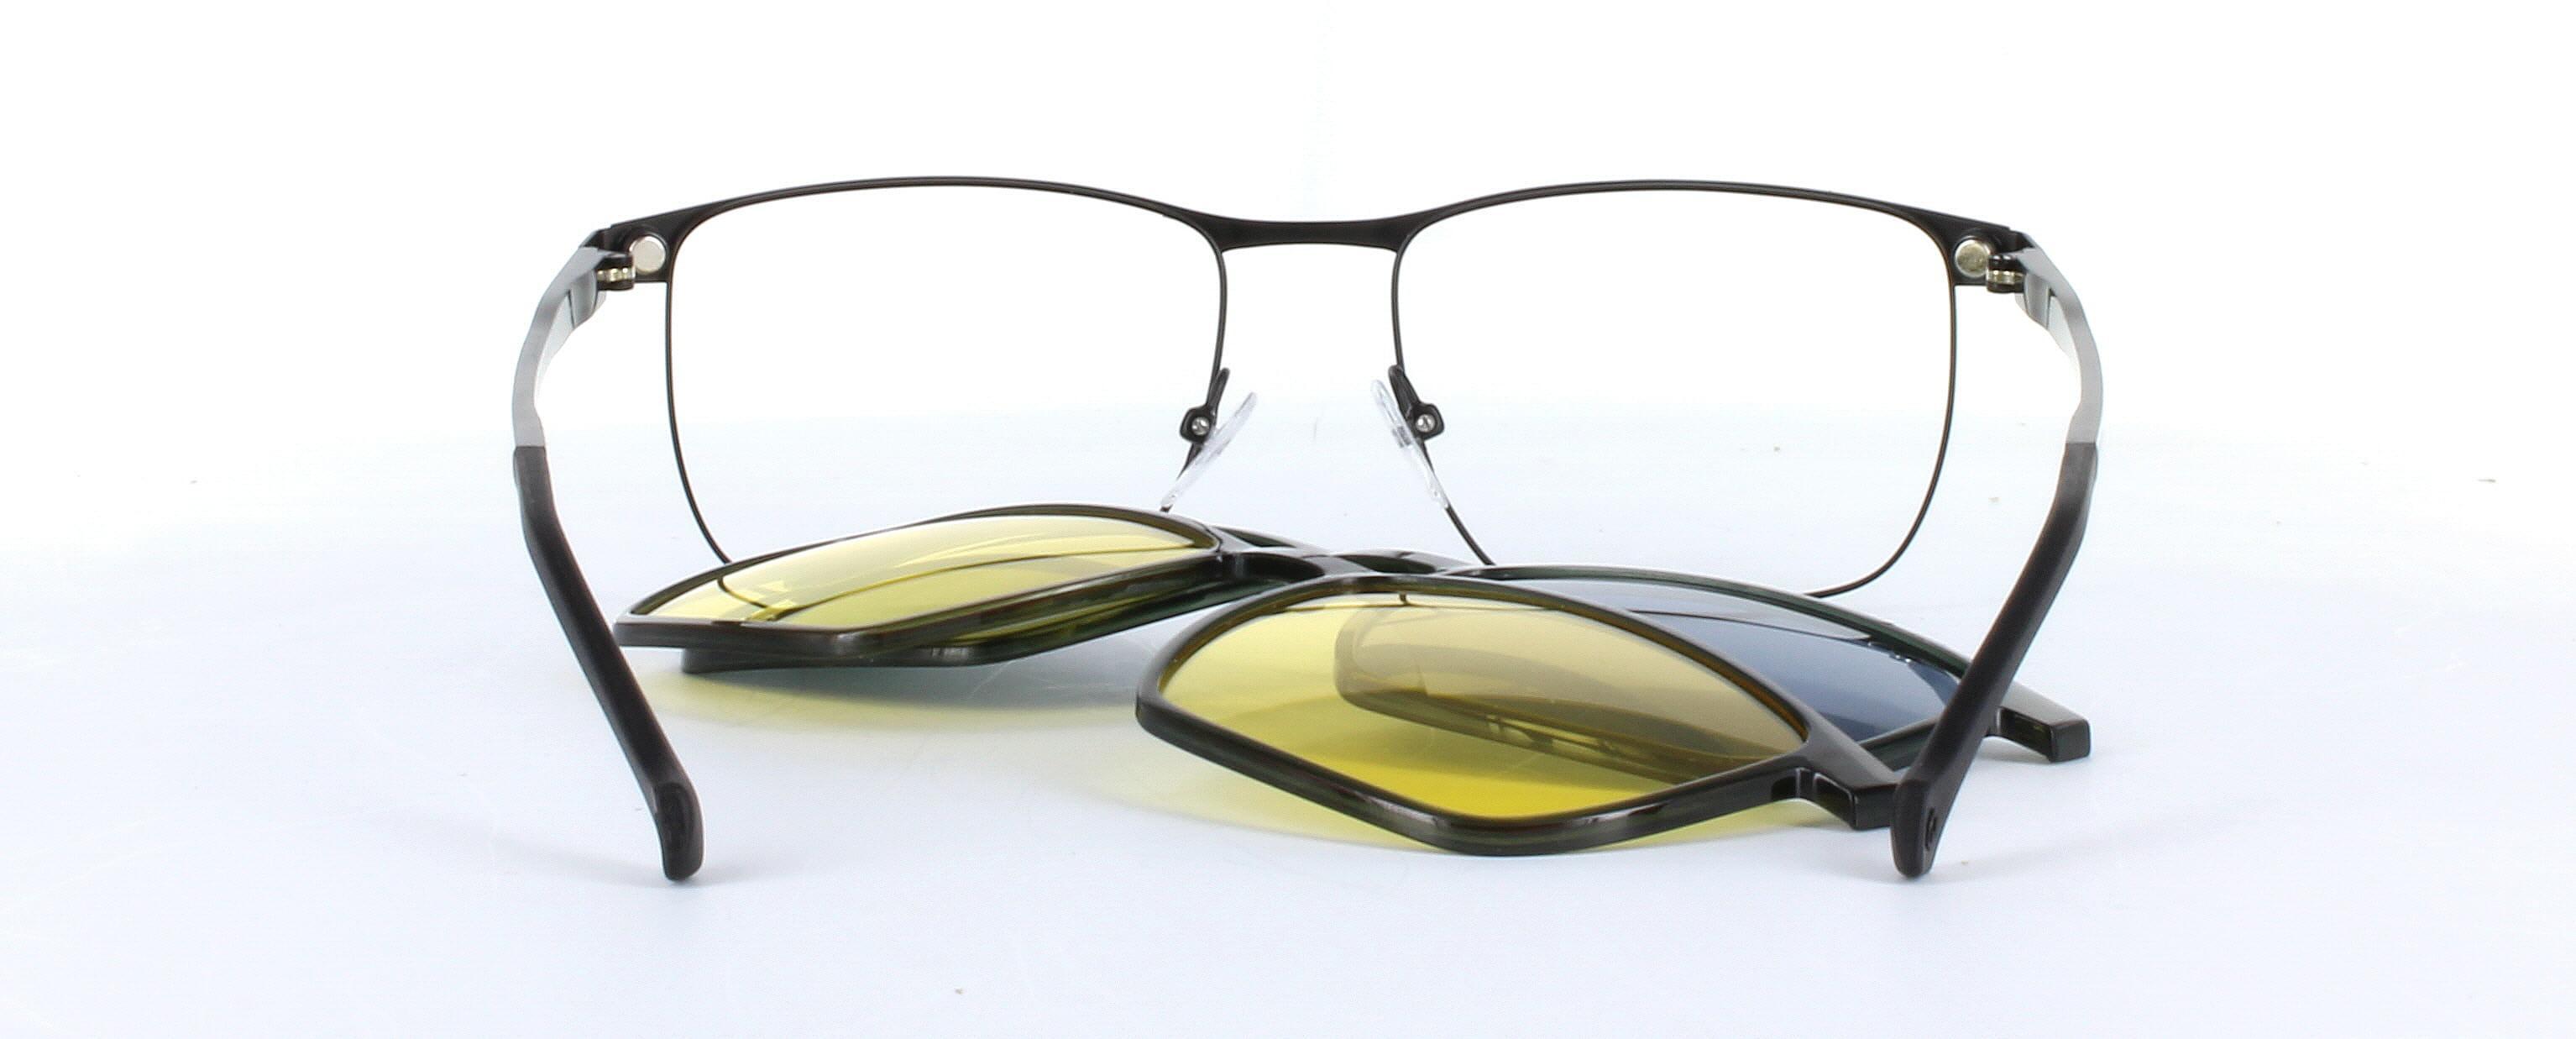 Eyecroxx 601 Grey Full Rim Metal Glasses - Image View 3